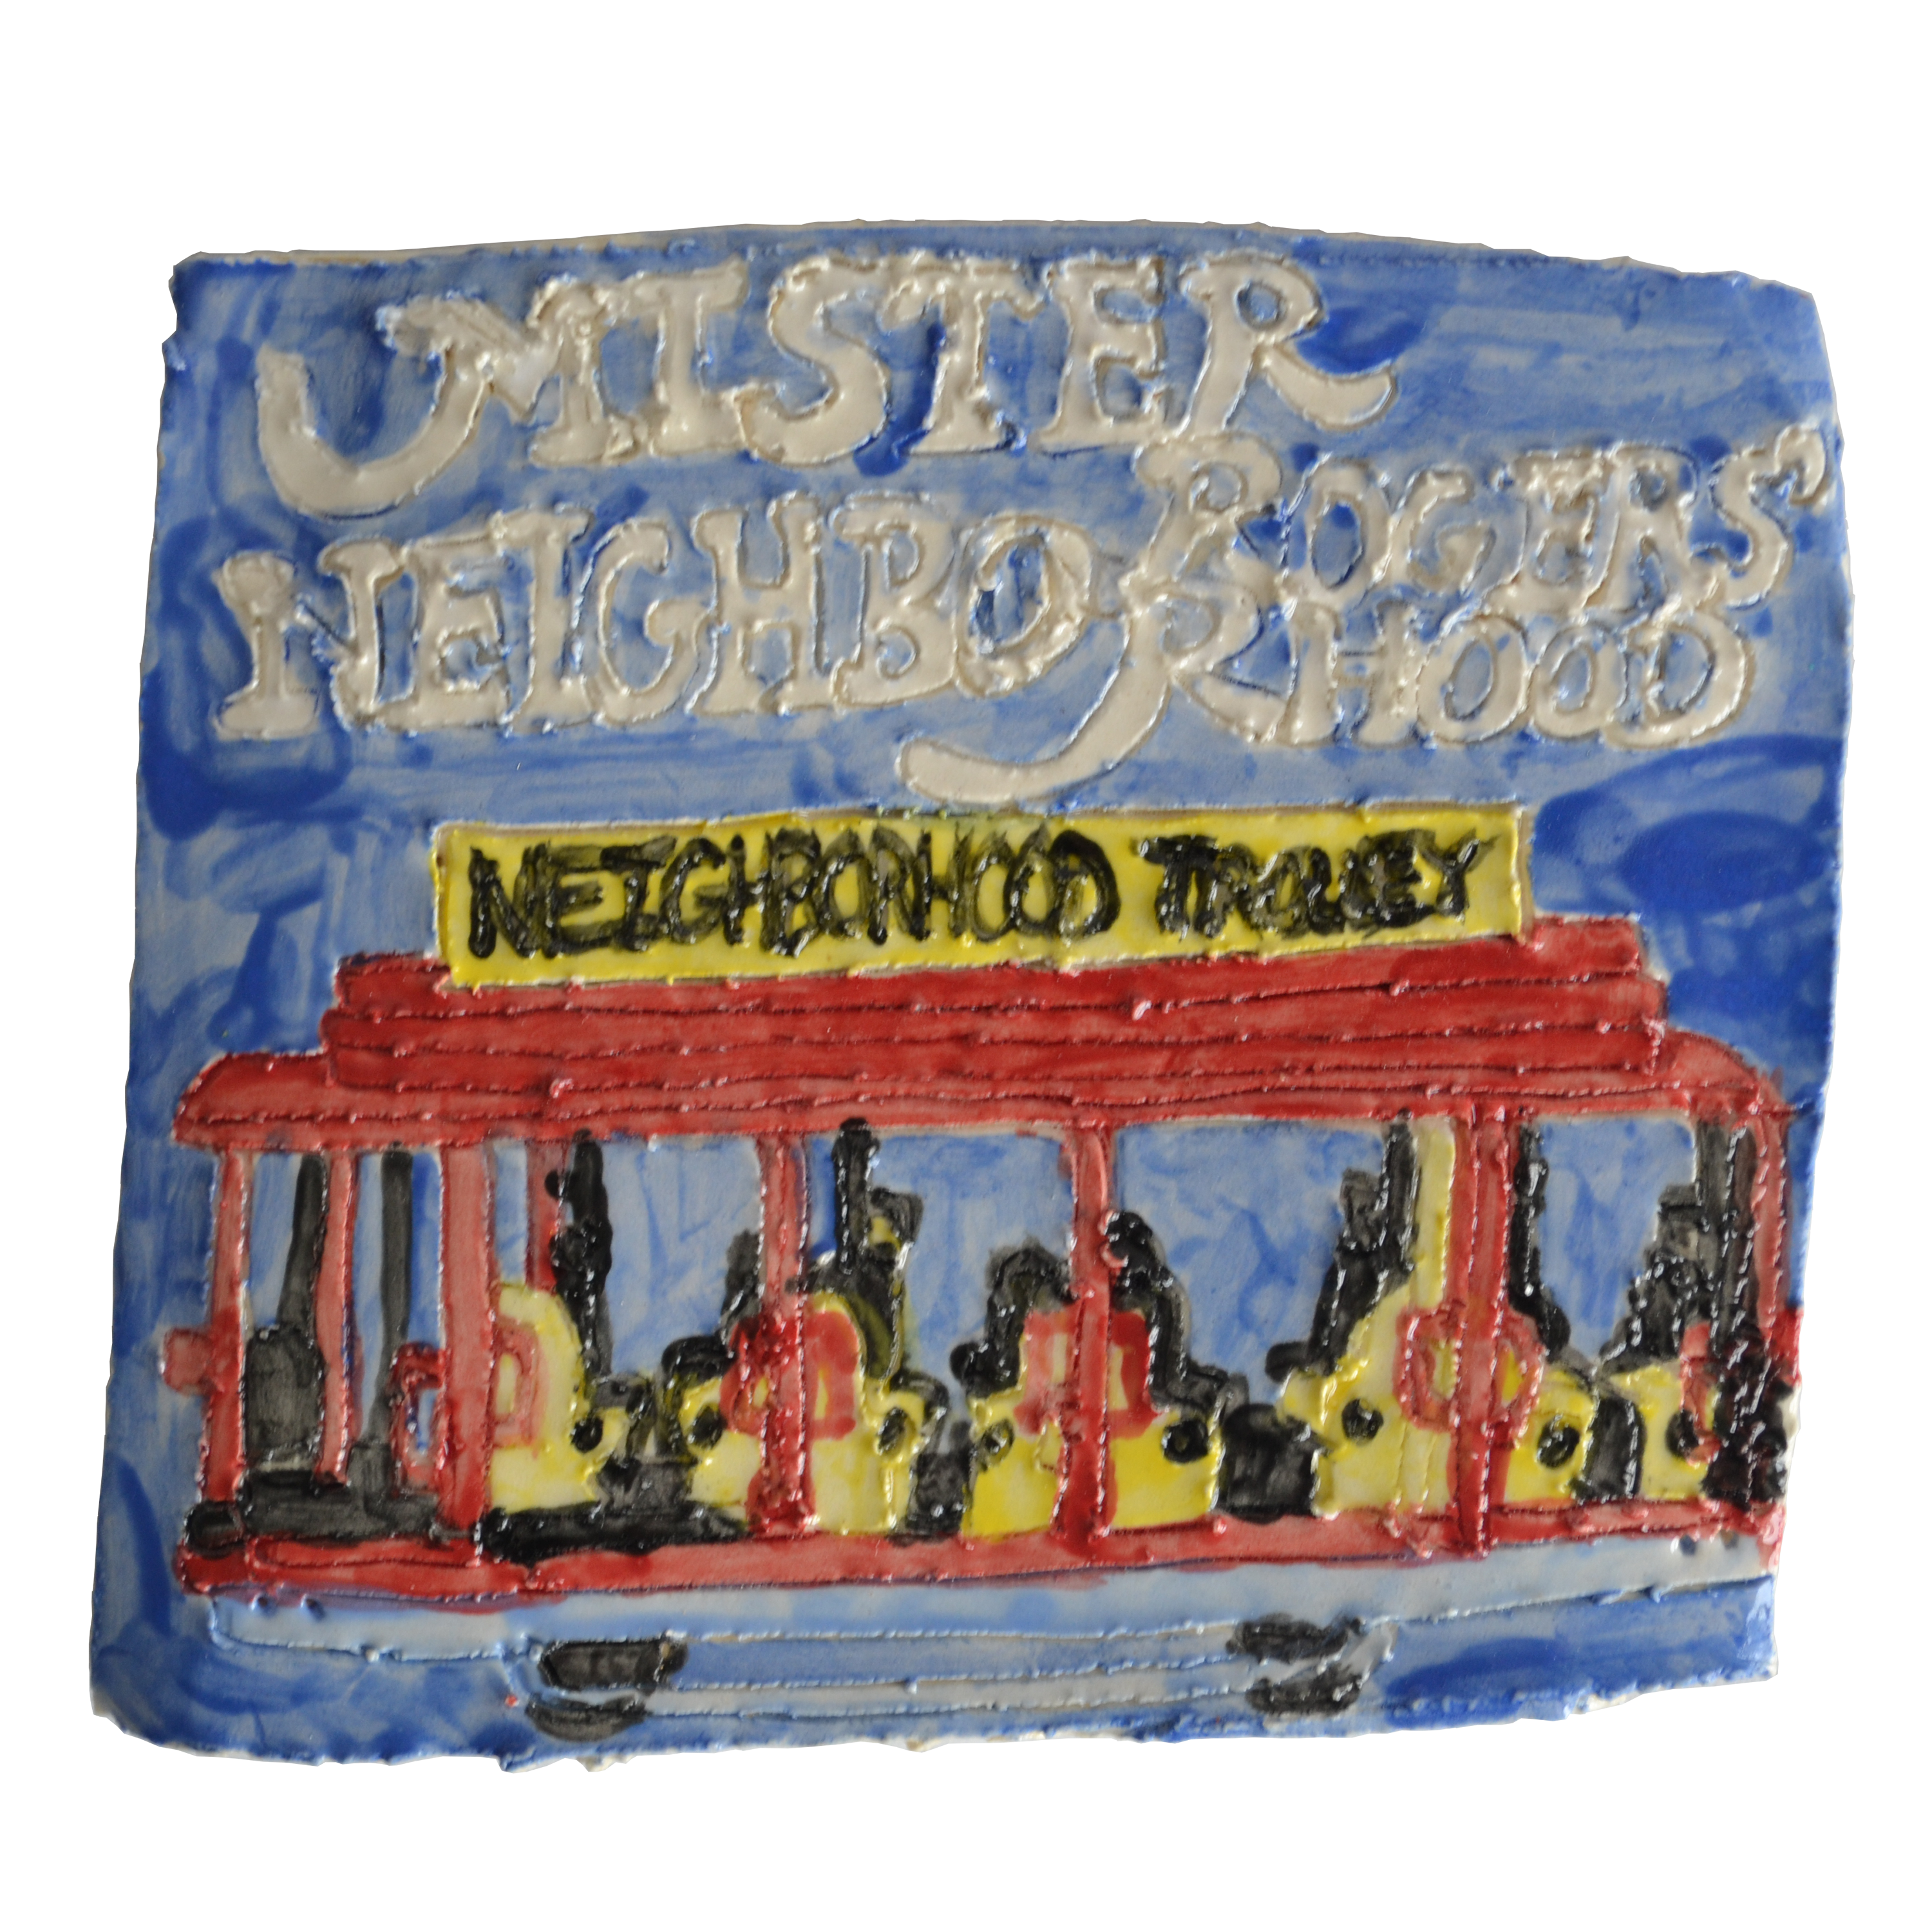 Mister Rogers' Neighborhood by Mimi Clark